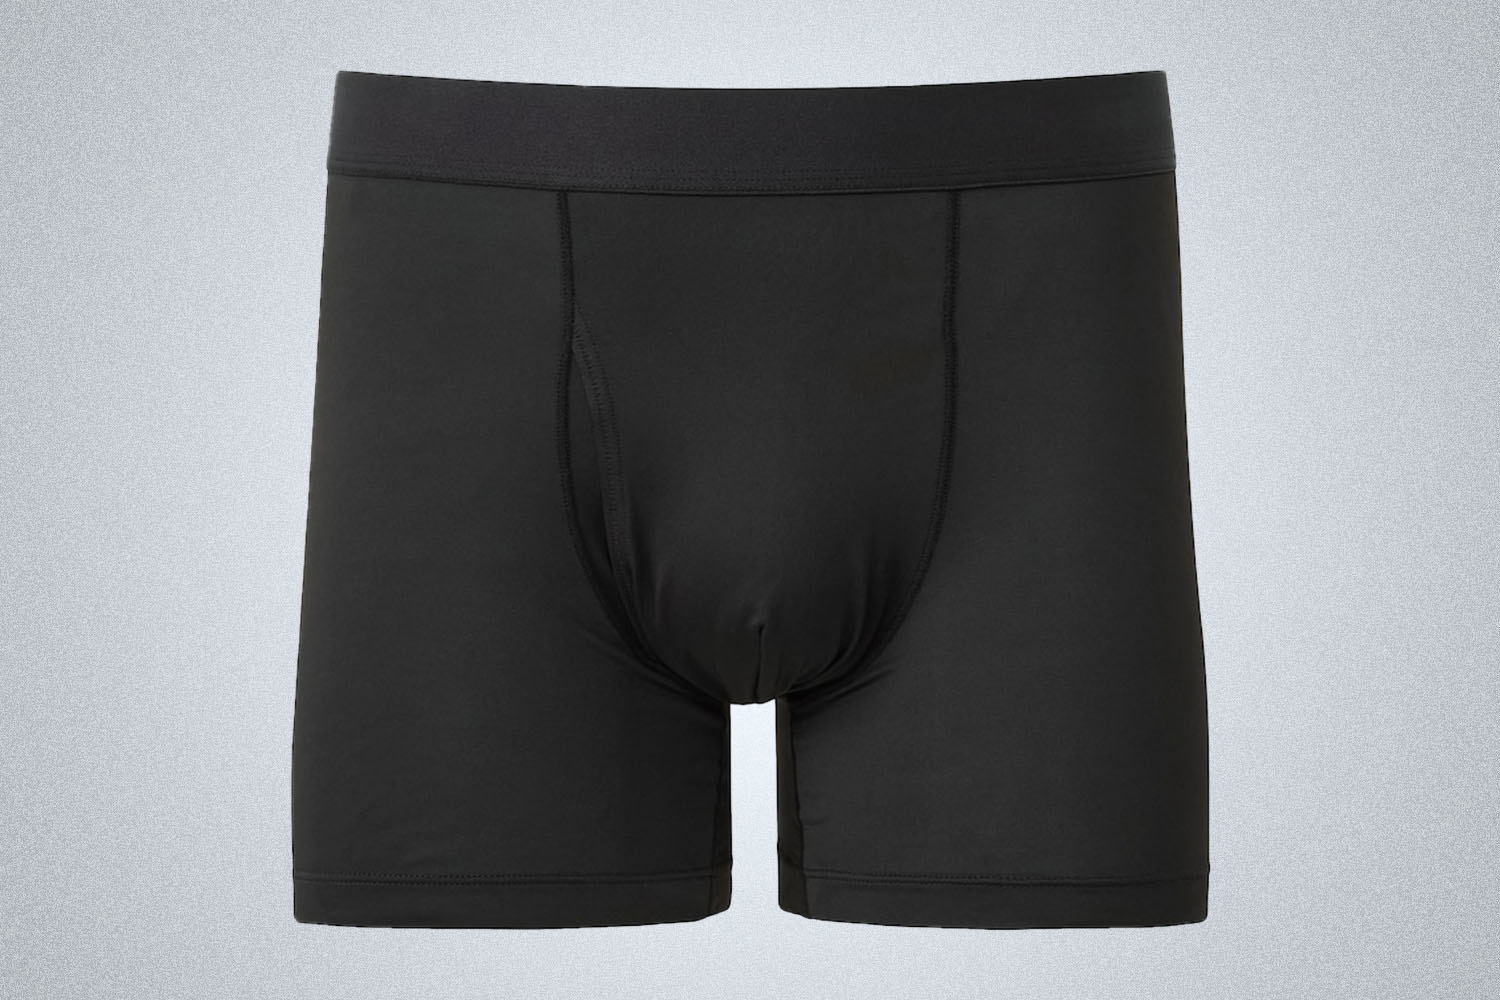 a black pair of underwear on a grey background